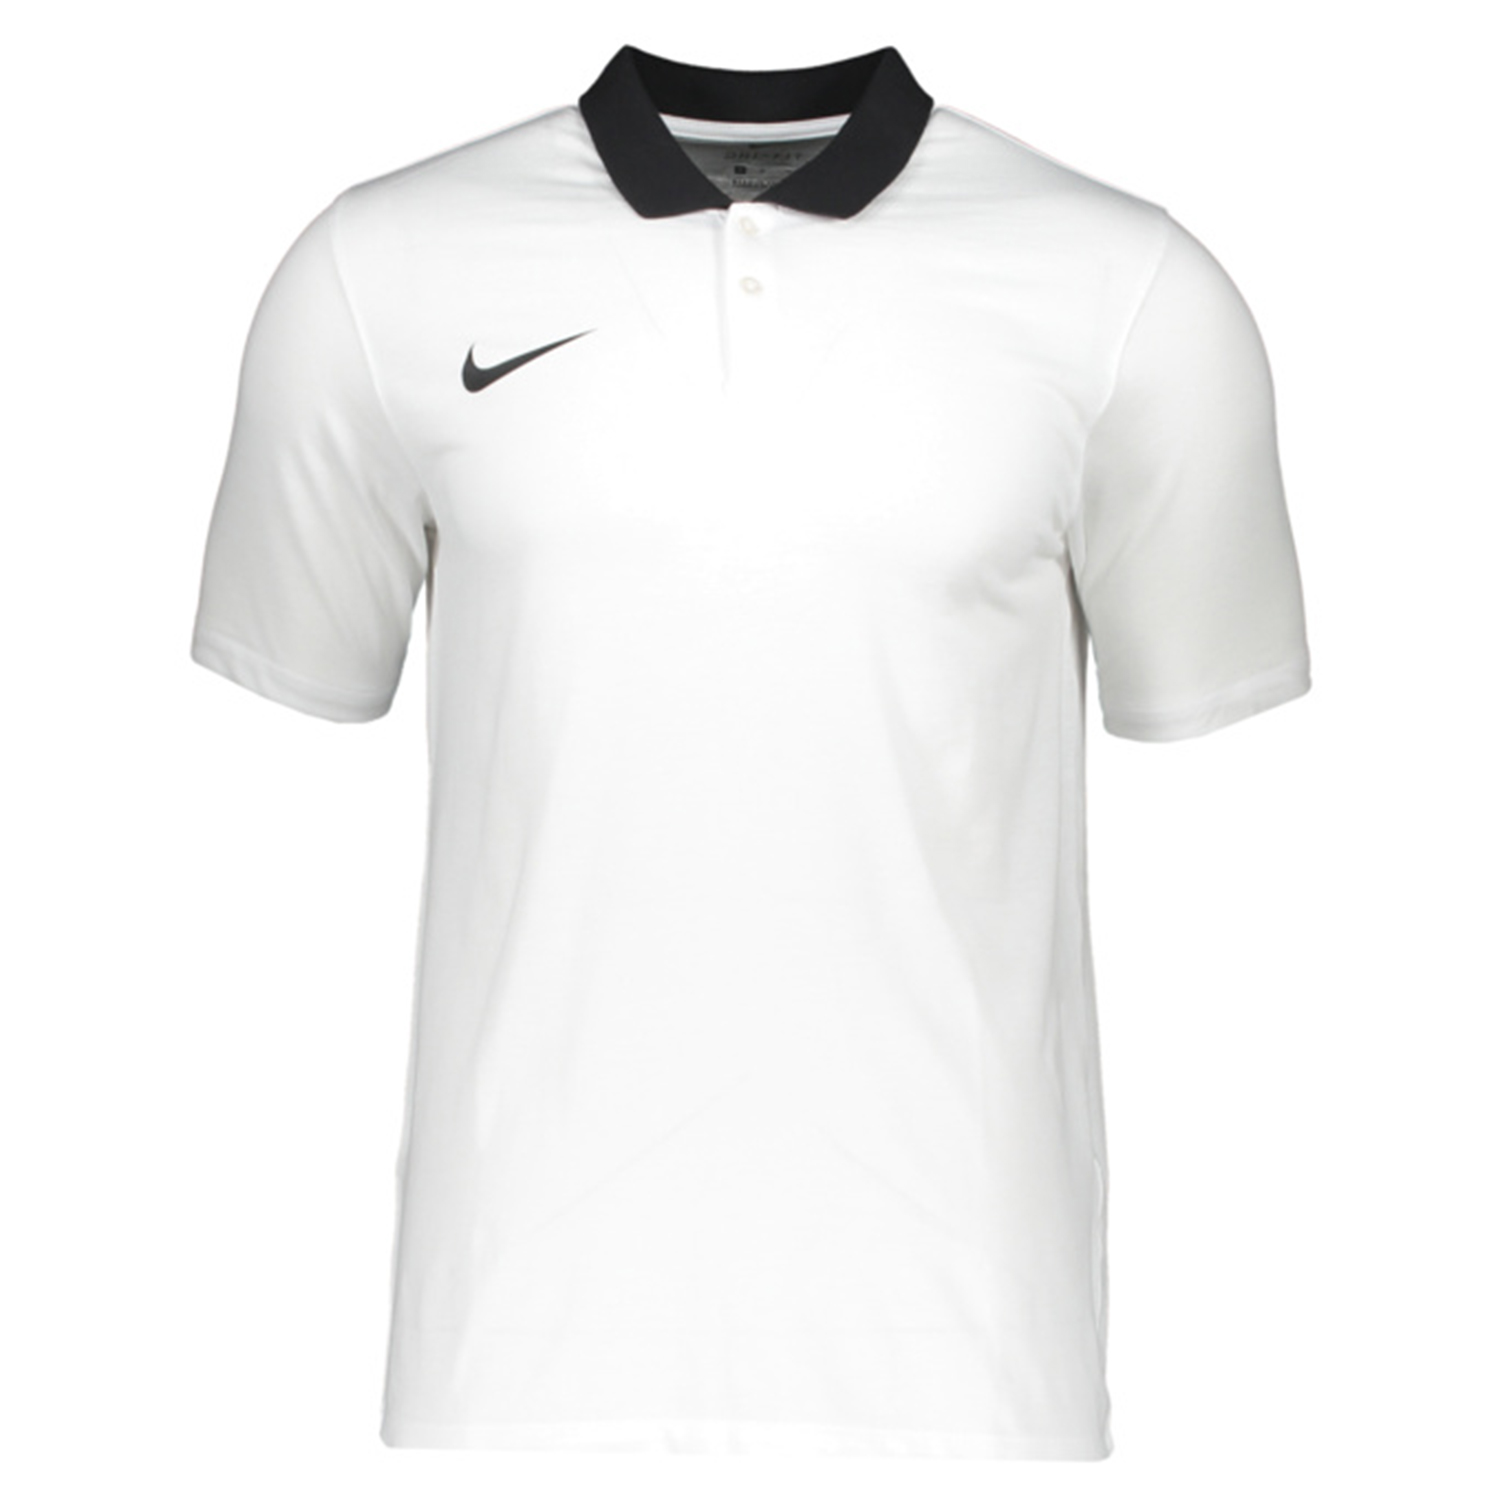 Nike Herren Poloshirt TEAM CLUB 20 Dri-FIT weiss/schwarz CW6933 100